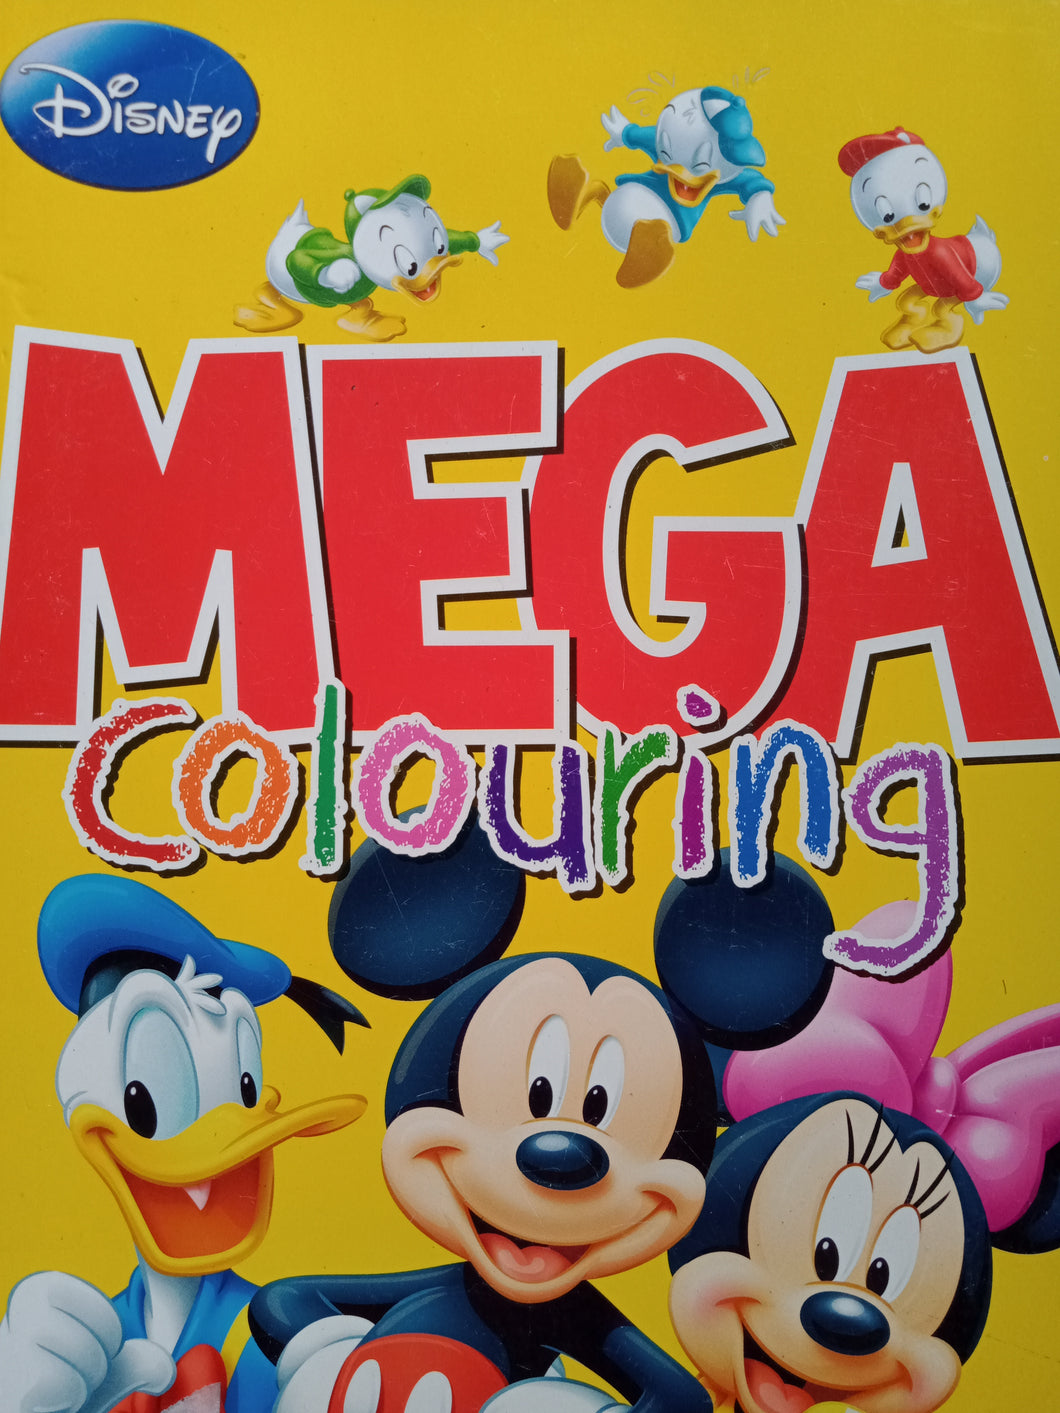 Disney Mega Colouring